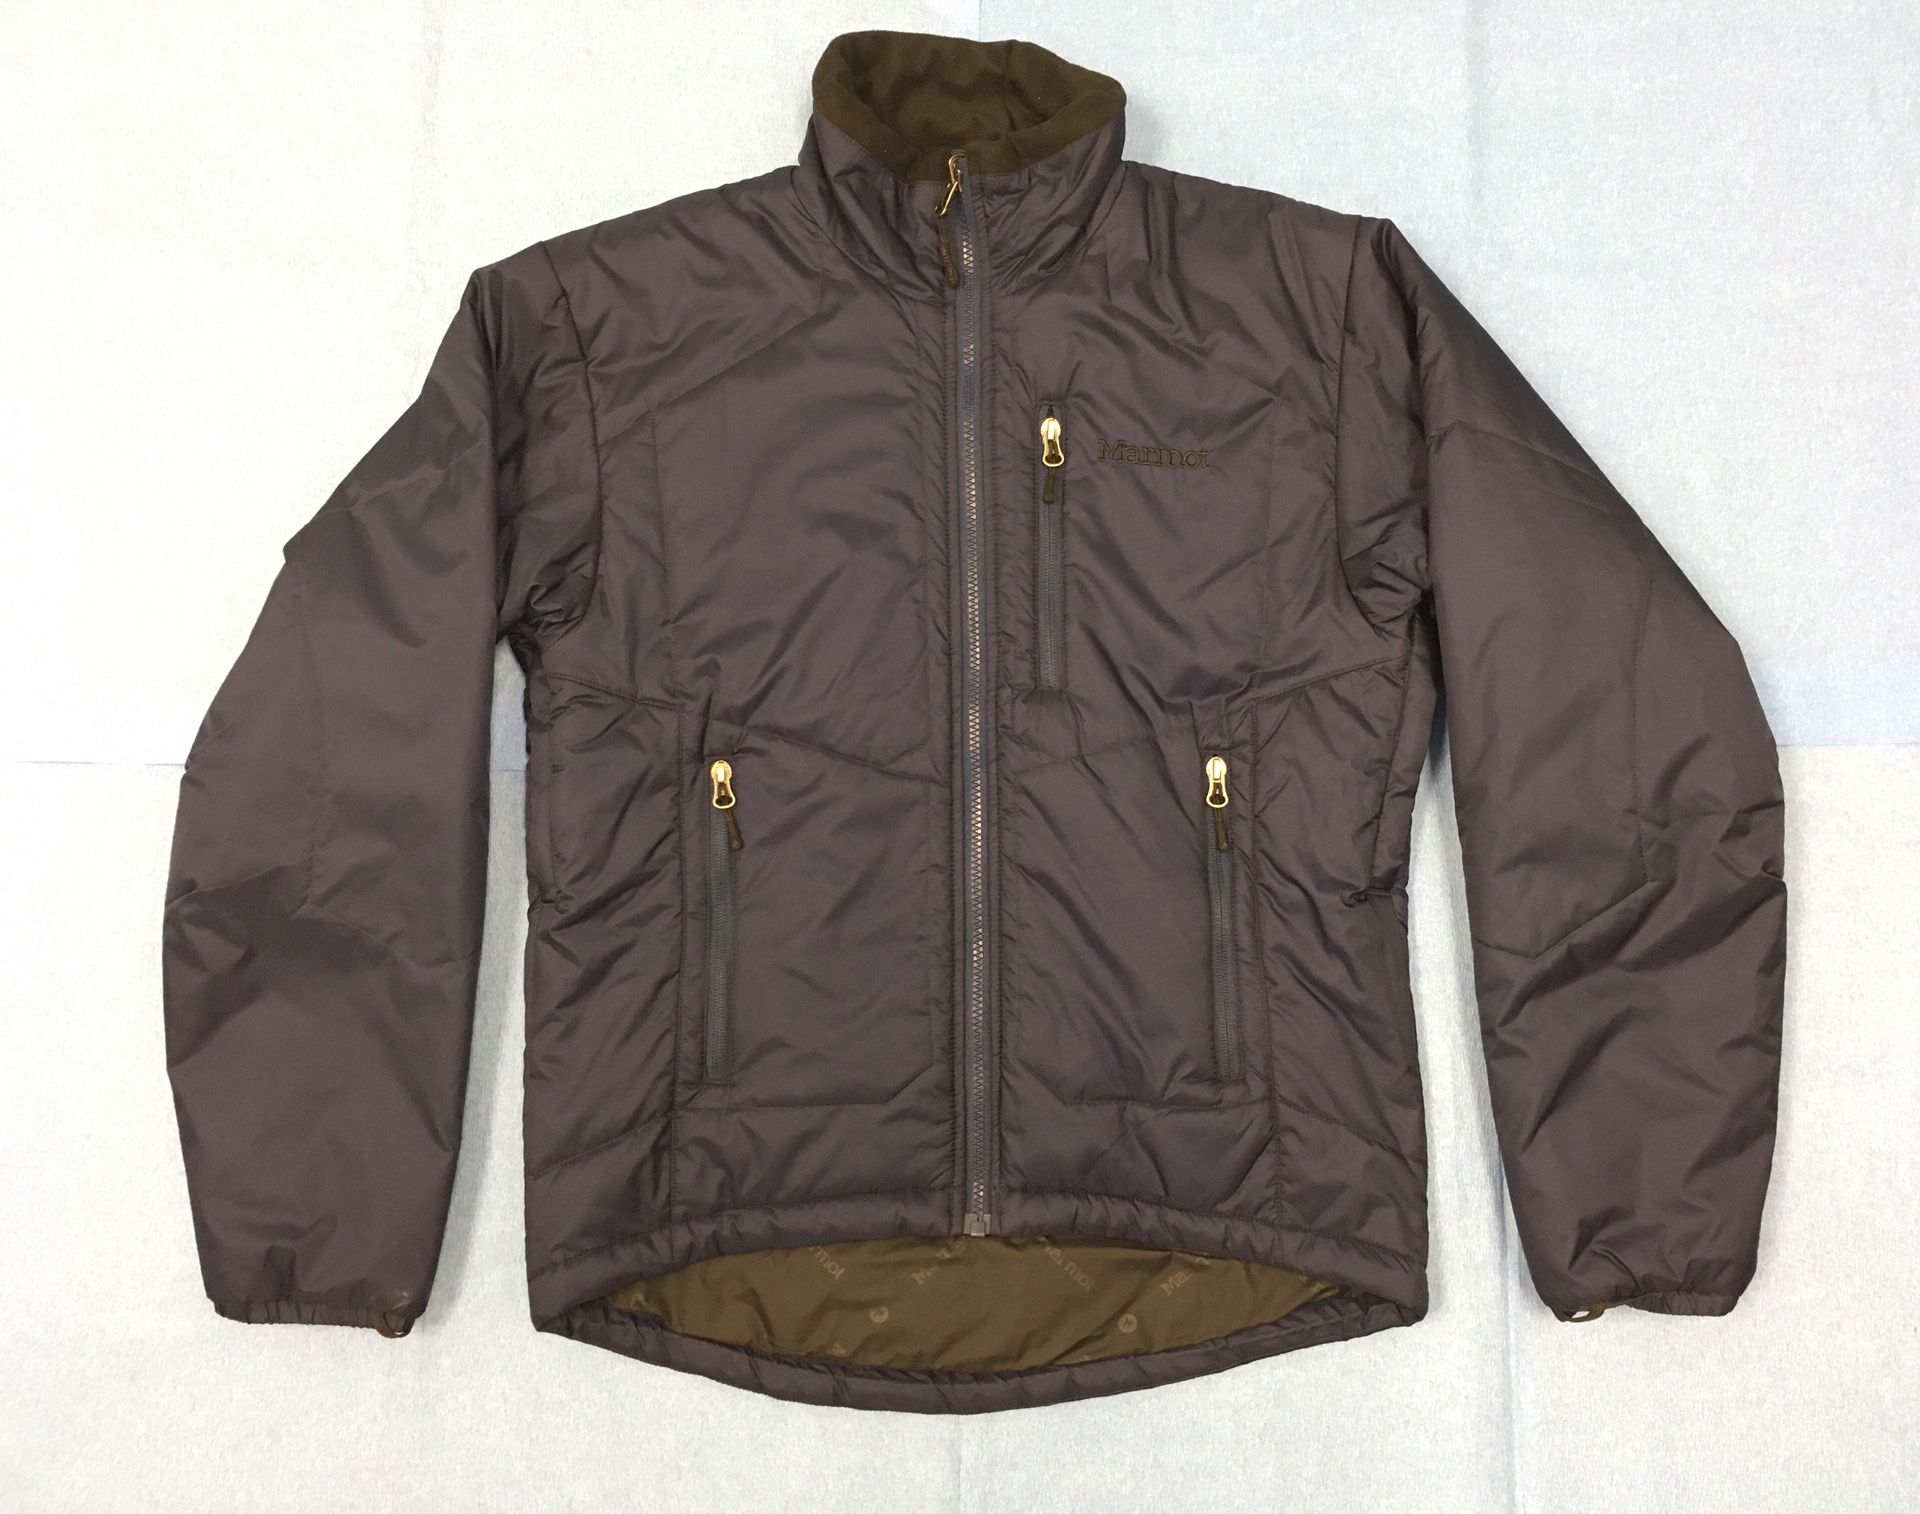 Blue Marmot jacket model TR6 ! EXCELLENT CONDITION!! PERFECT FIT